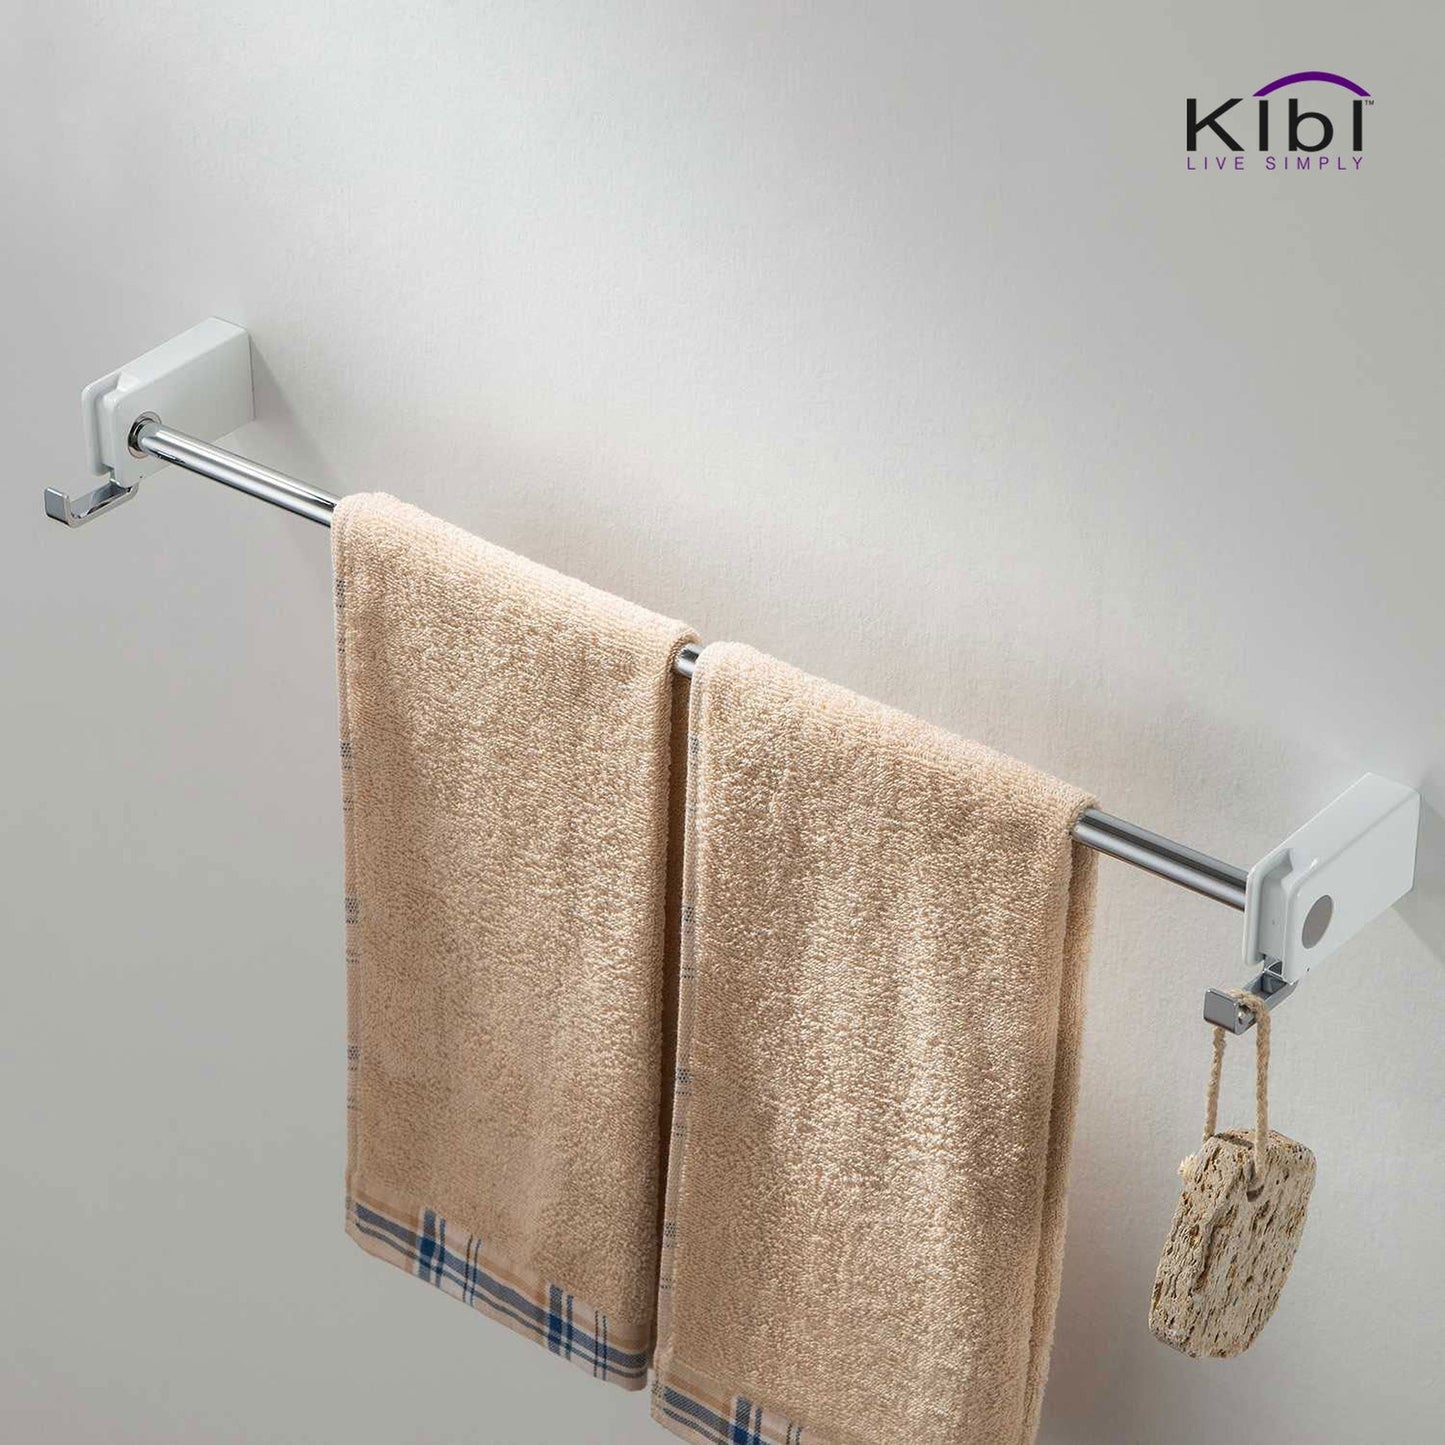 KIBI Artis Bathroom Towel Bar in Chrome White Finish